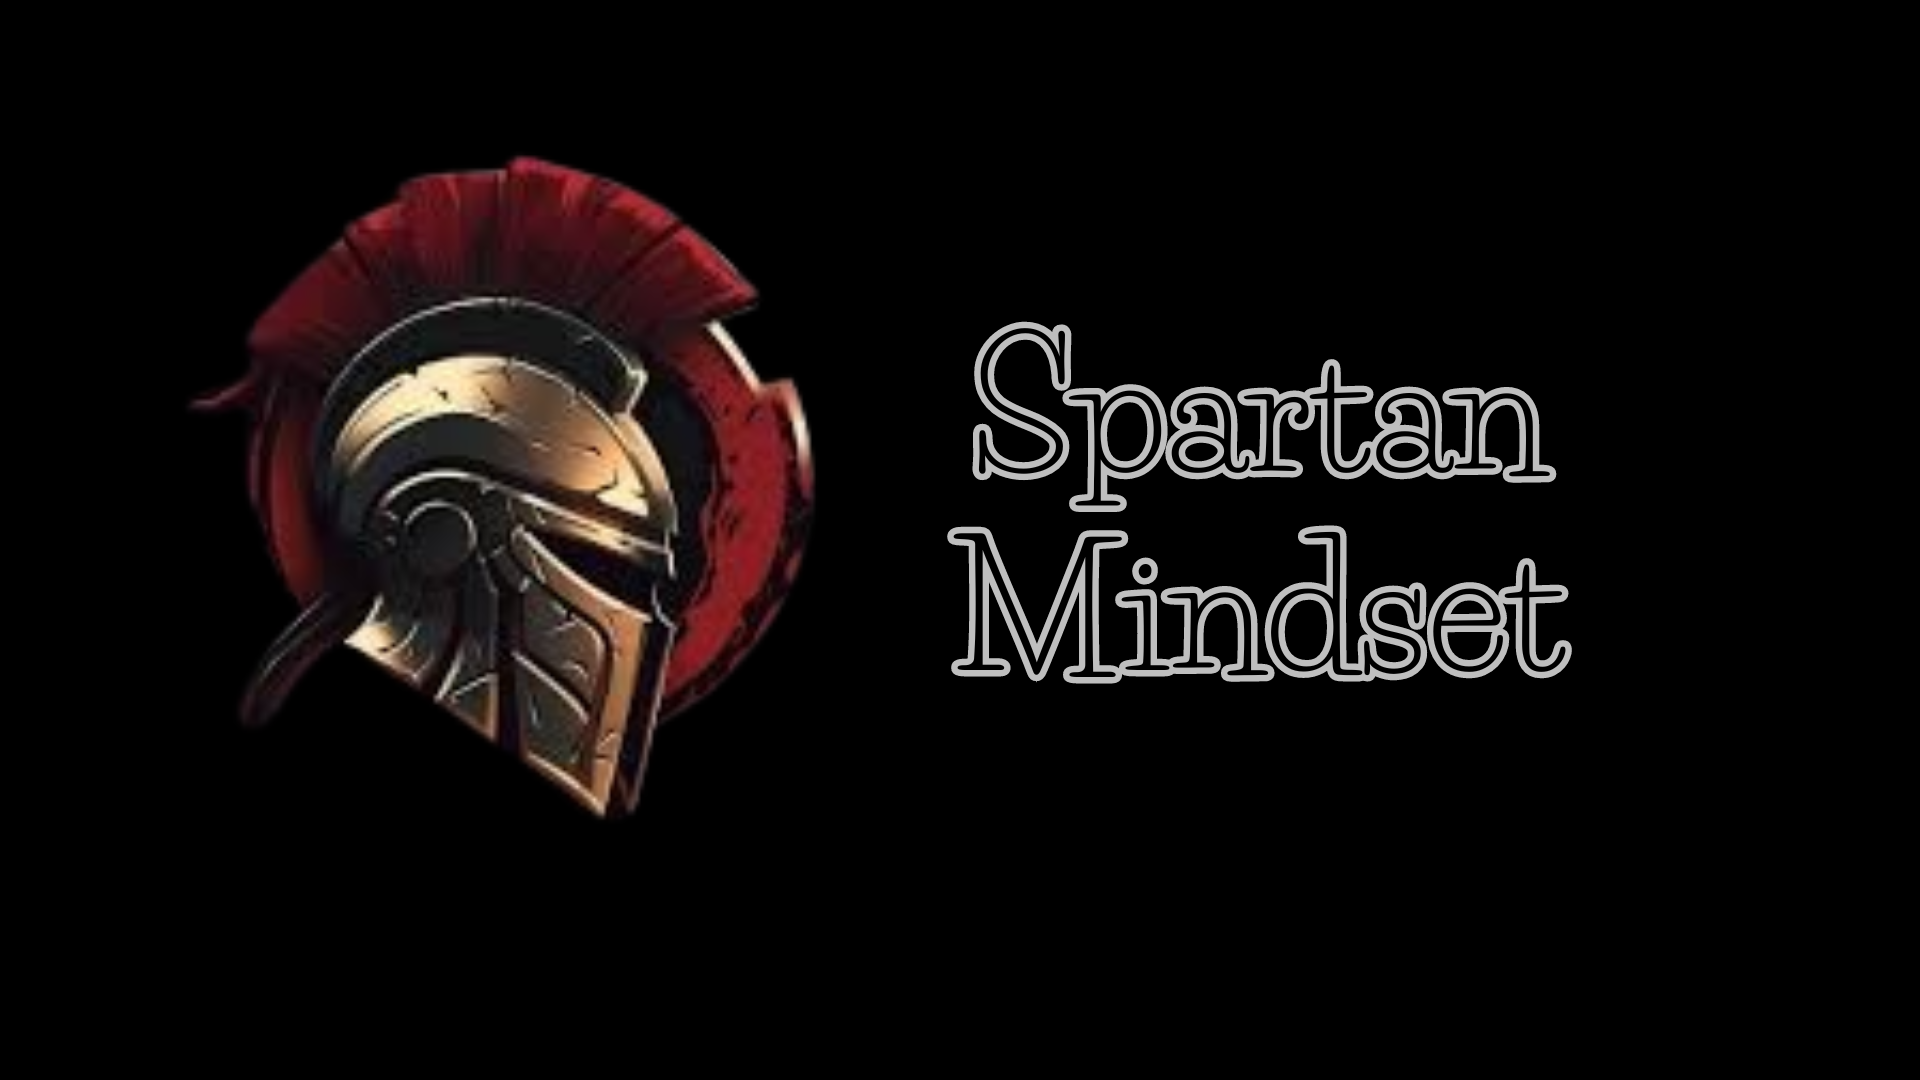 Spartan mindset: Embracing Spartan principles in business